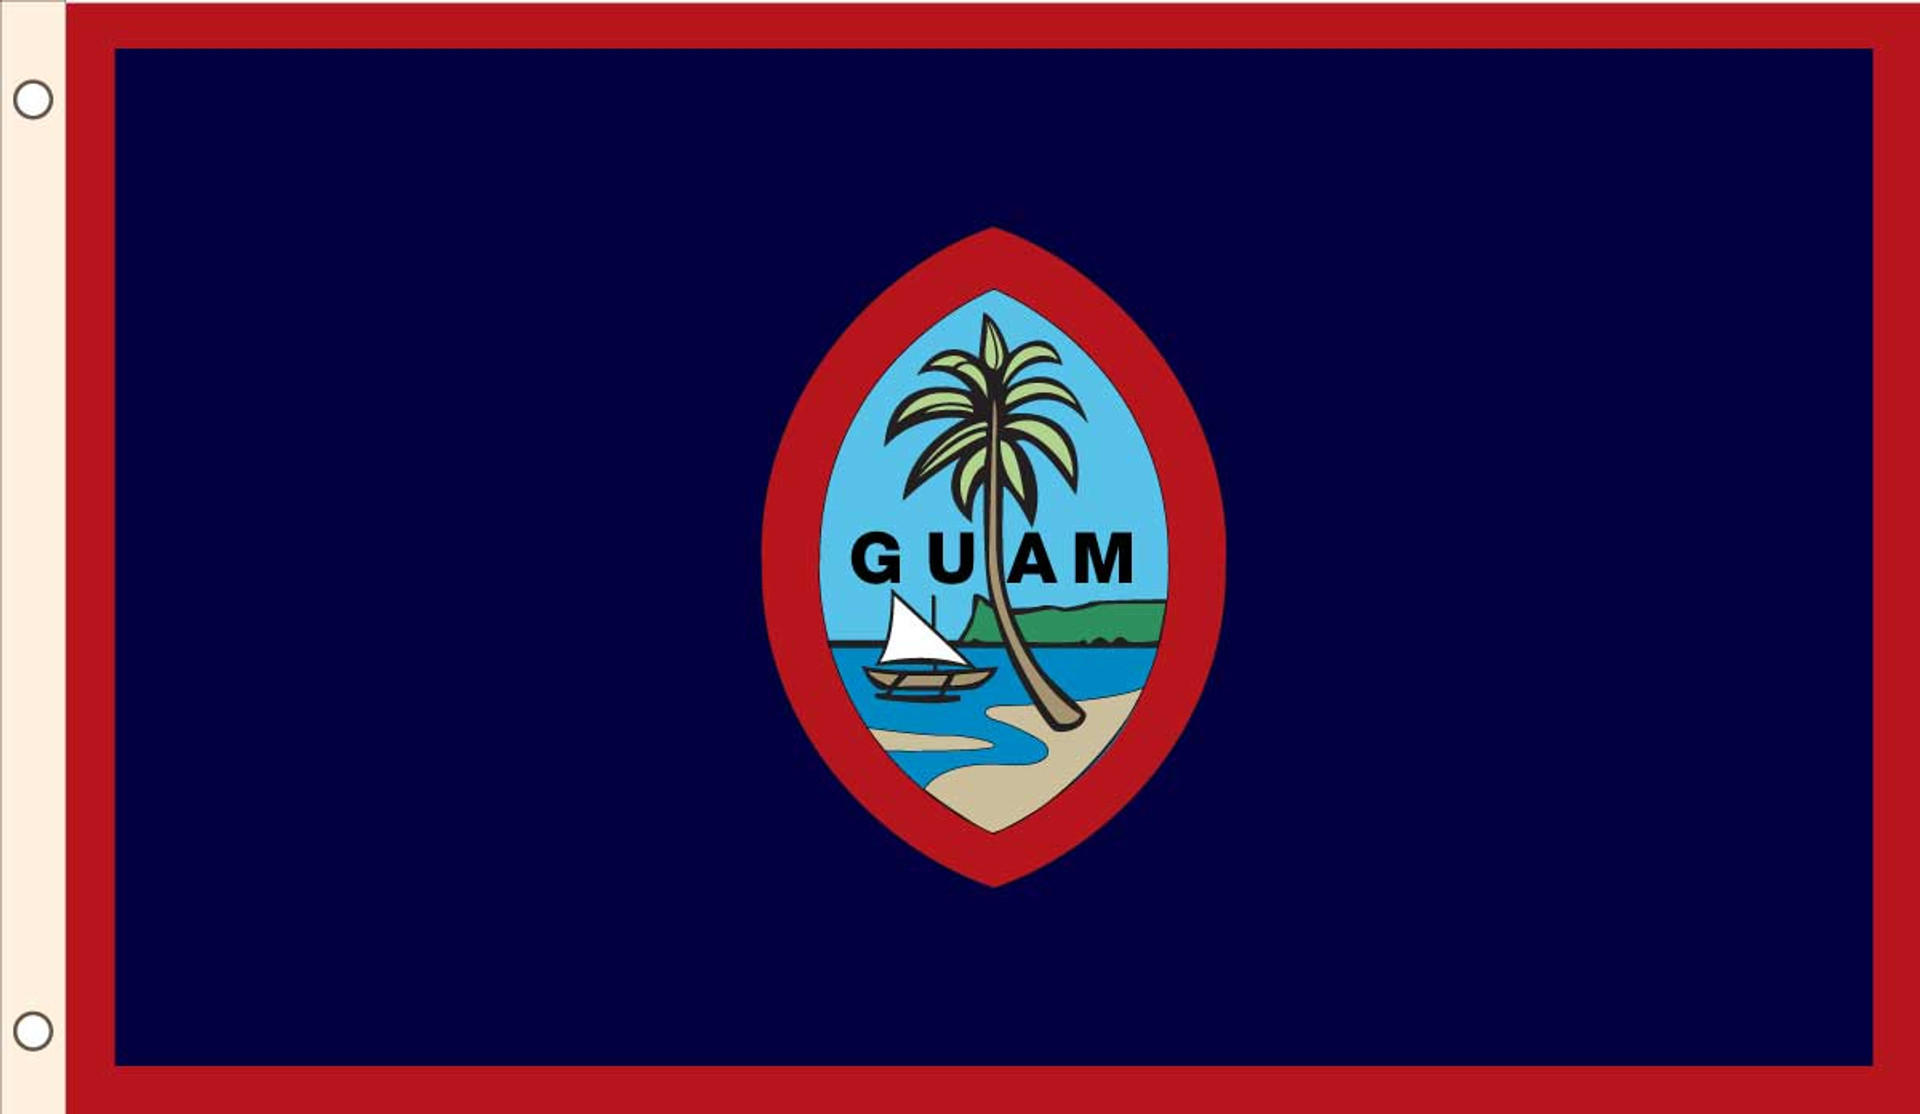 Guam Ts Guam Product Flag Of The U S Territory Of Guam Gerard Aflague Collection